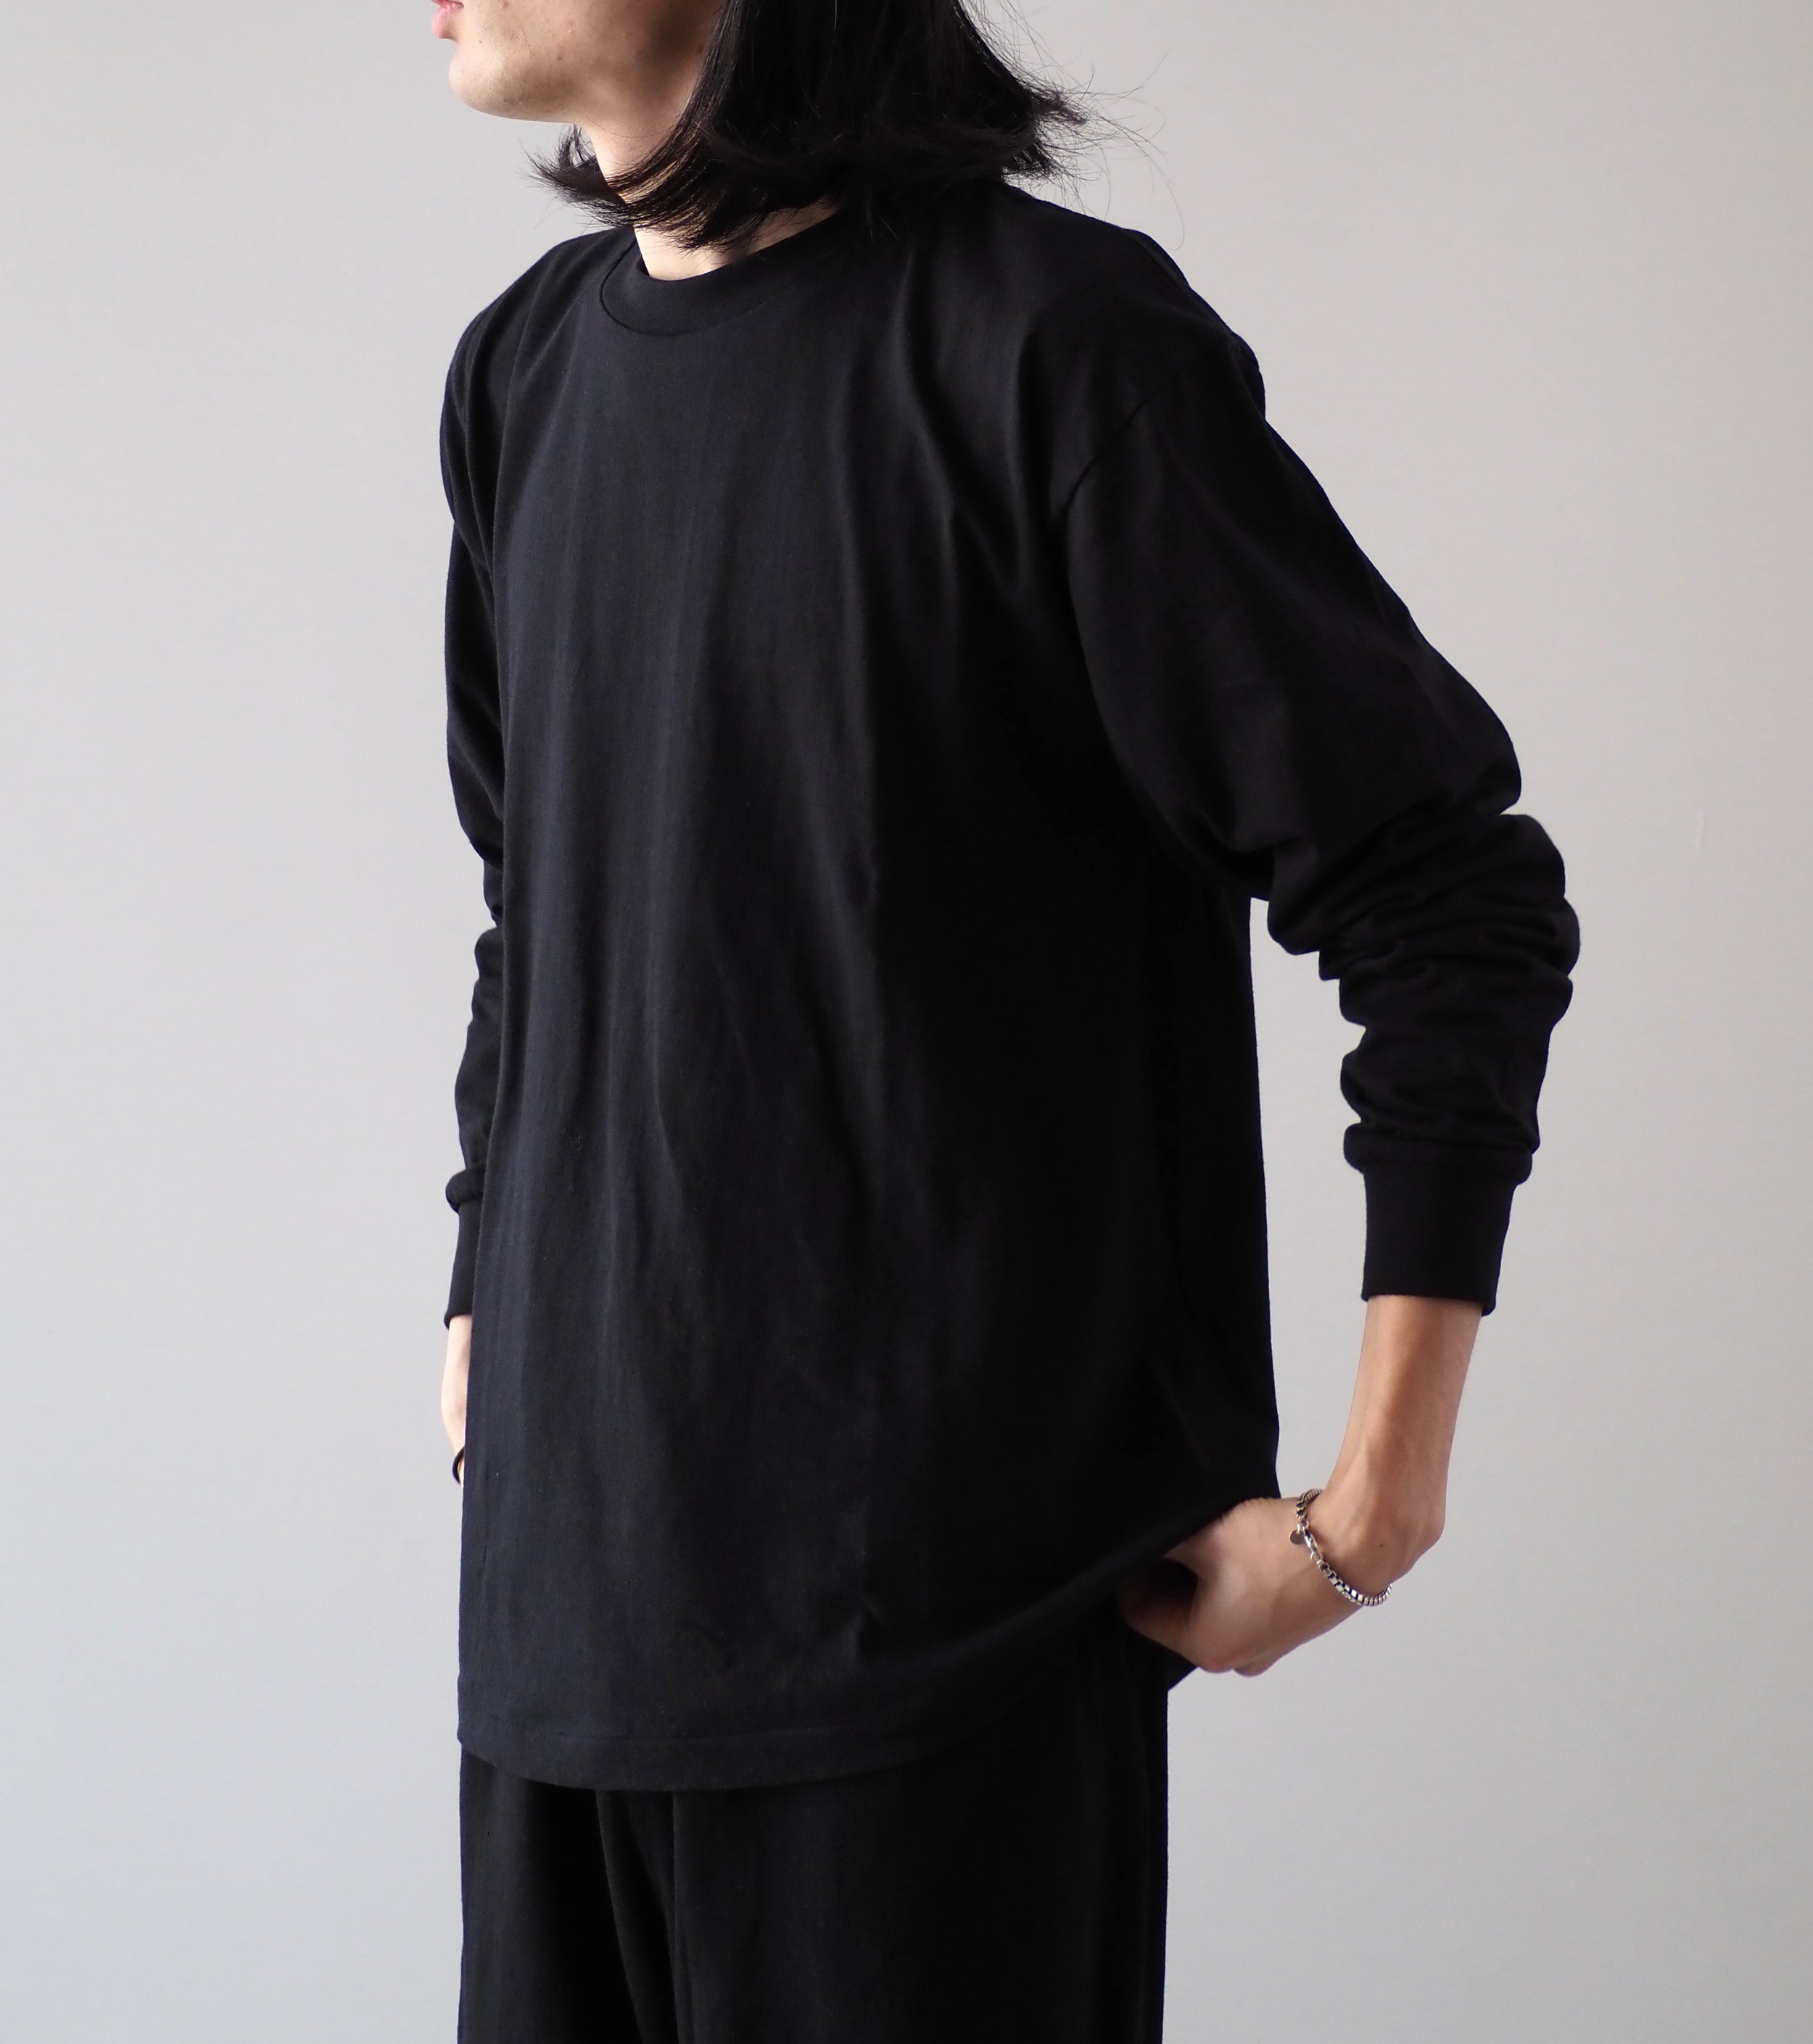 COMOLI  Cotton Jersey Long Sleeve Tee Shirt, Fade Black